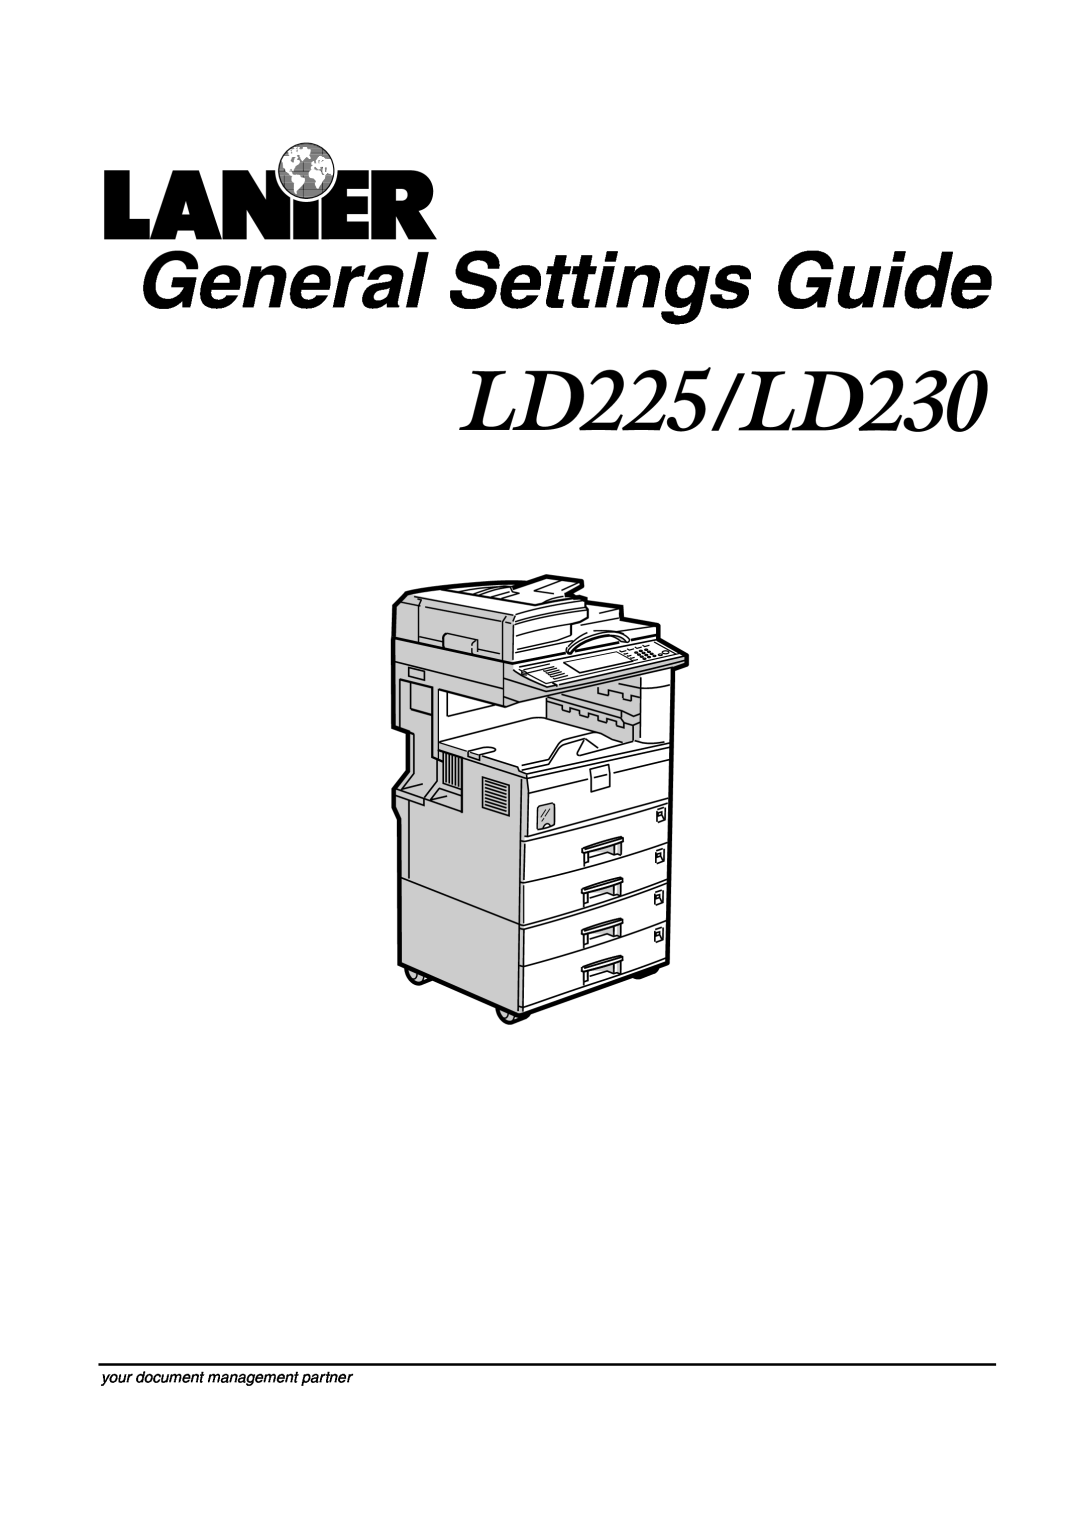 Lanier LD230, LD225 manual General Settings Guide, your document management partner 